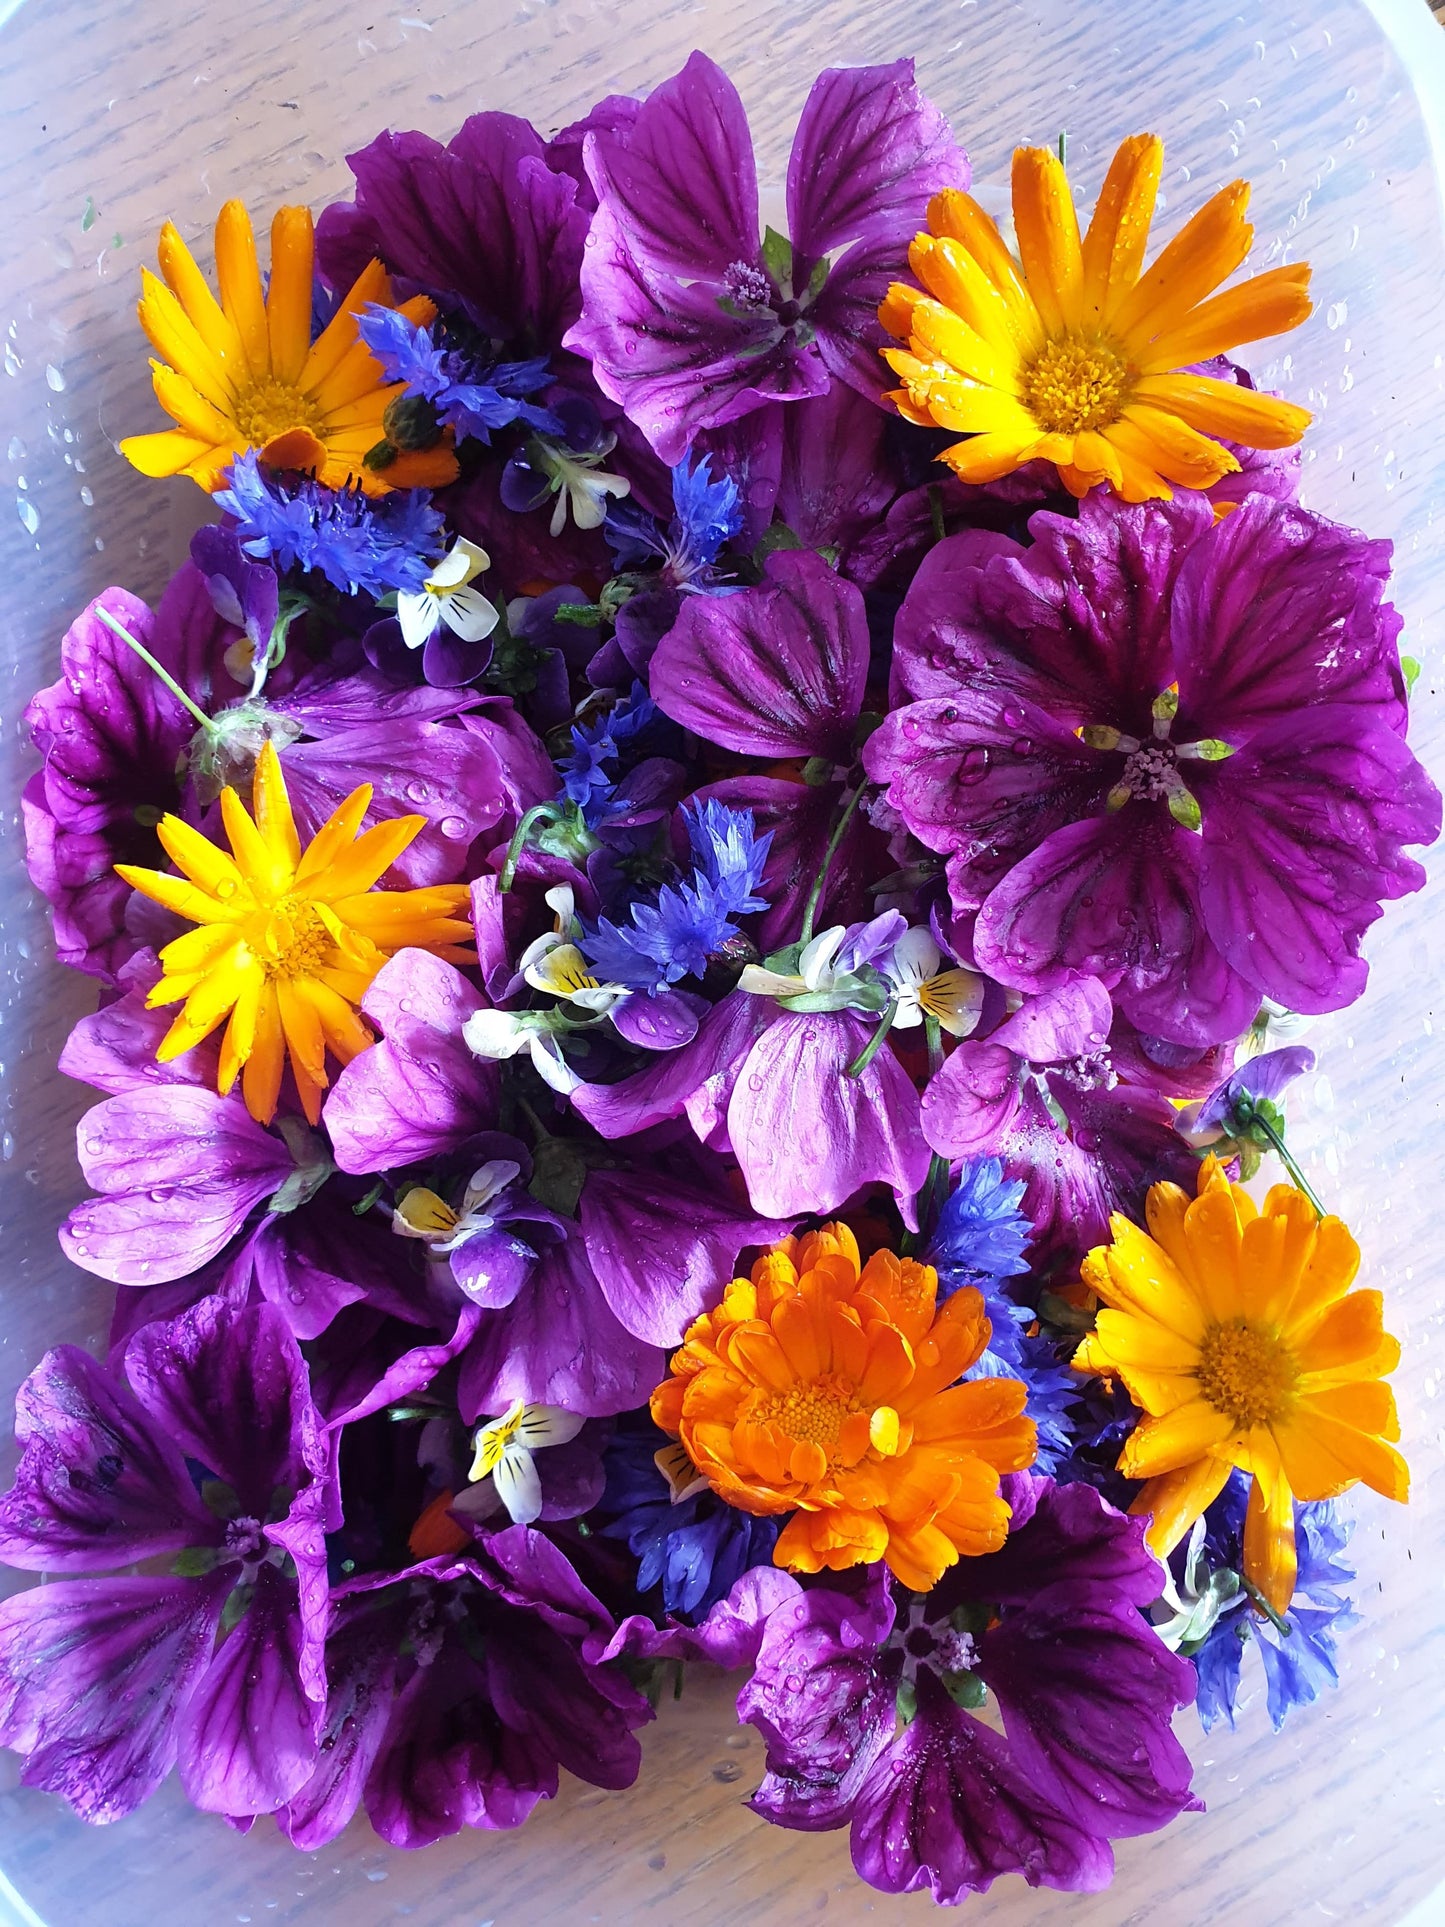 Edible Flowers - Nasturtium, Borage, Pansy, Cornflower, Calendula - from Sean Nua Farm, County Cavan